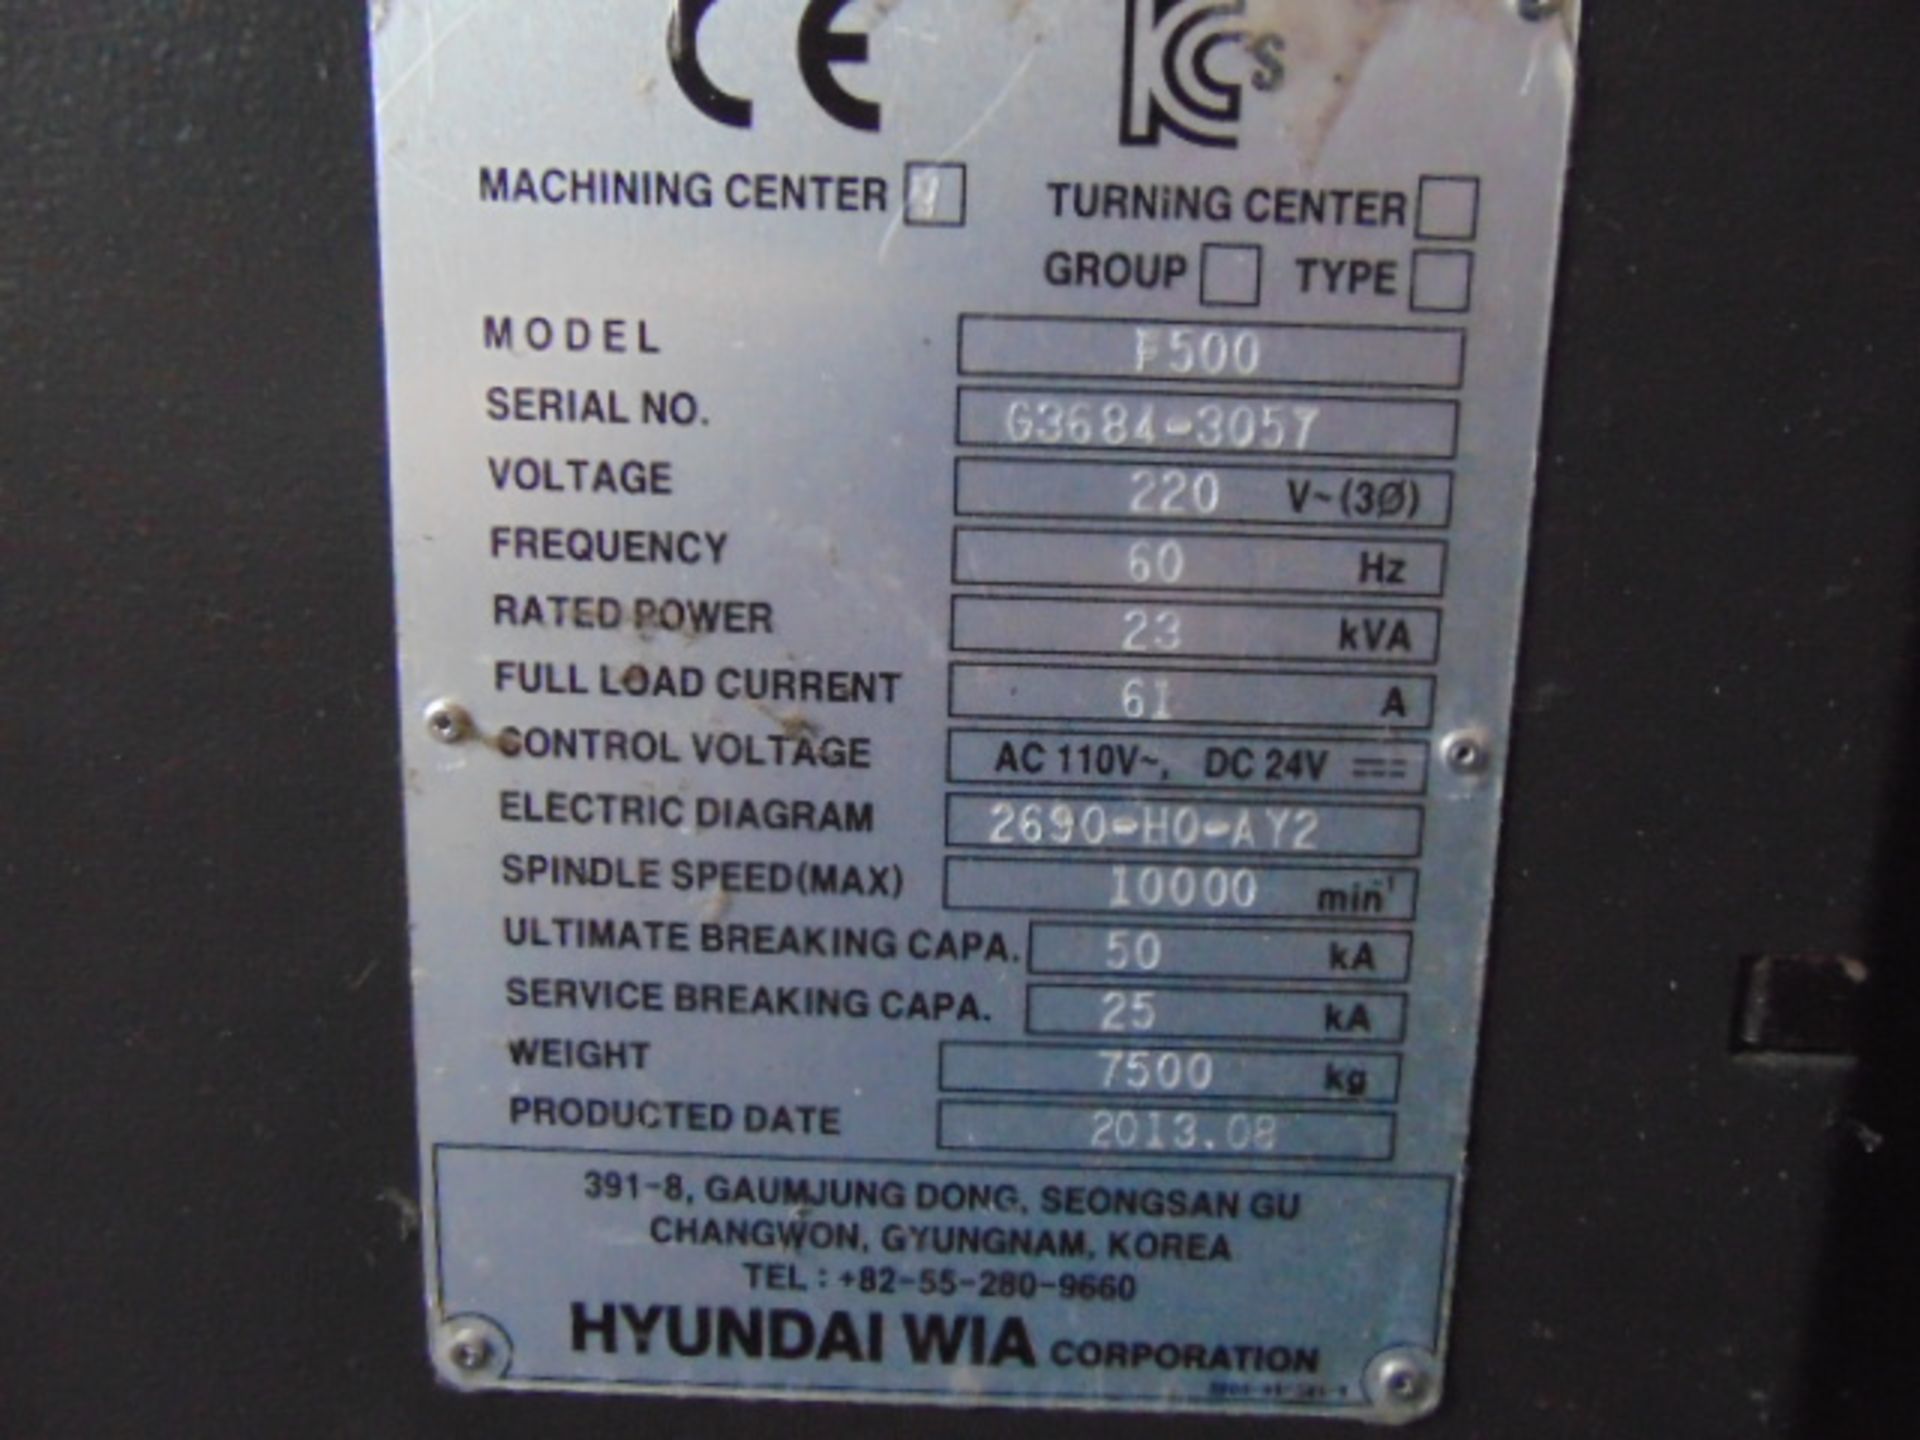 CNC VERTICAL MACHINING CENTER, HYUNDAI WIA MDL. F500 4-AXIS, new 8/2013, Fanuc i Series CNC control, - Image 12 of 16